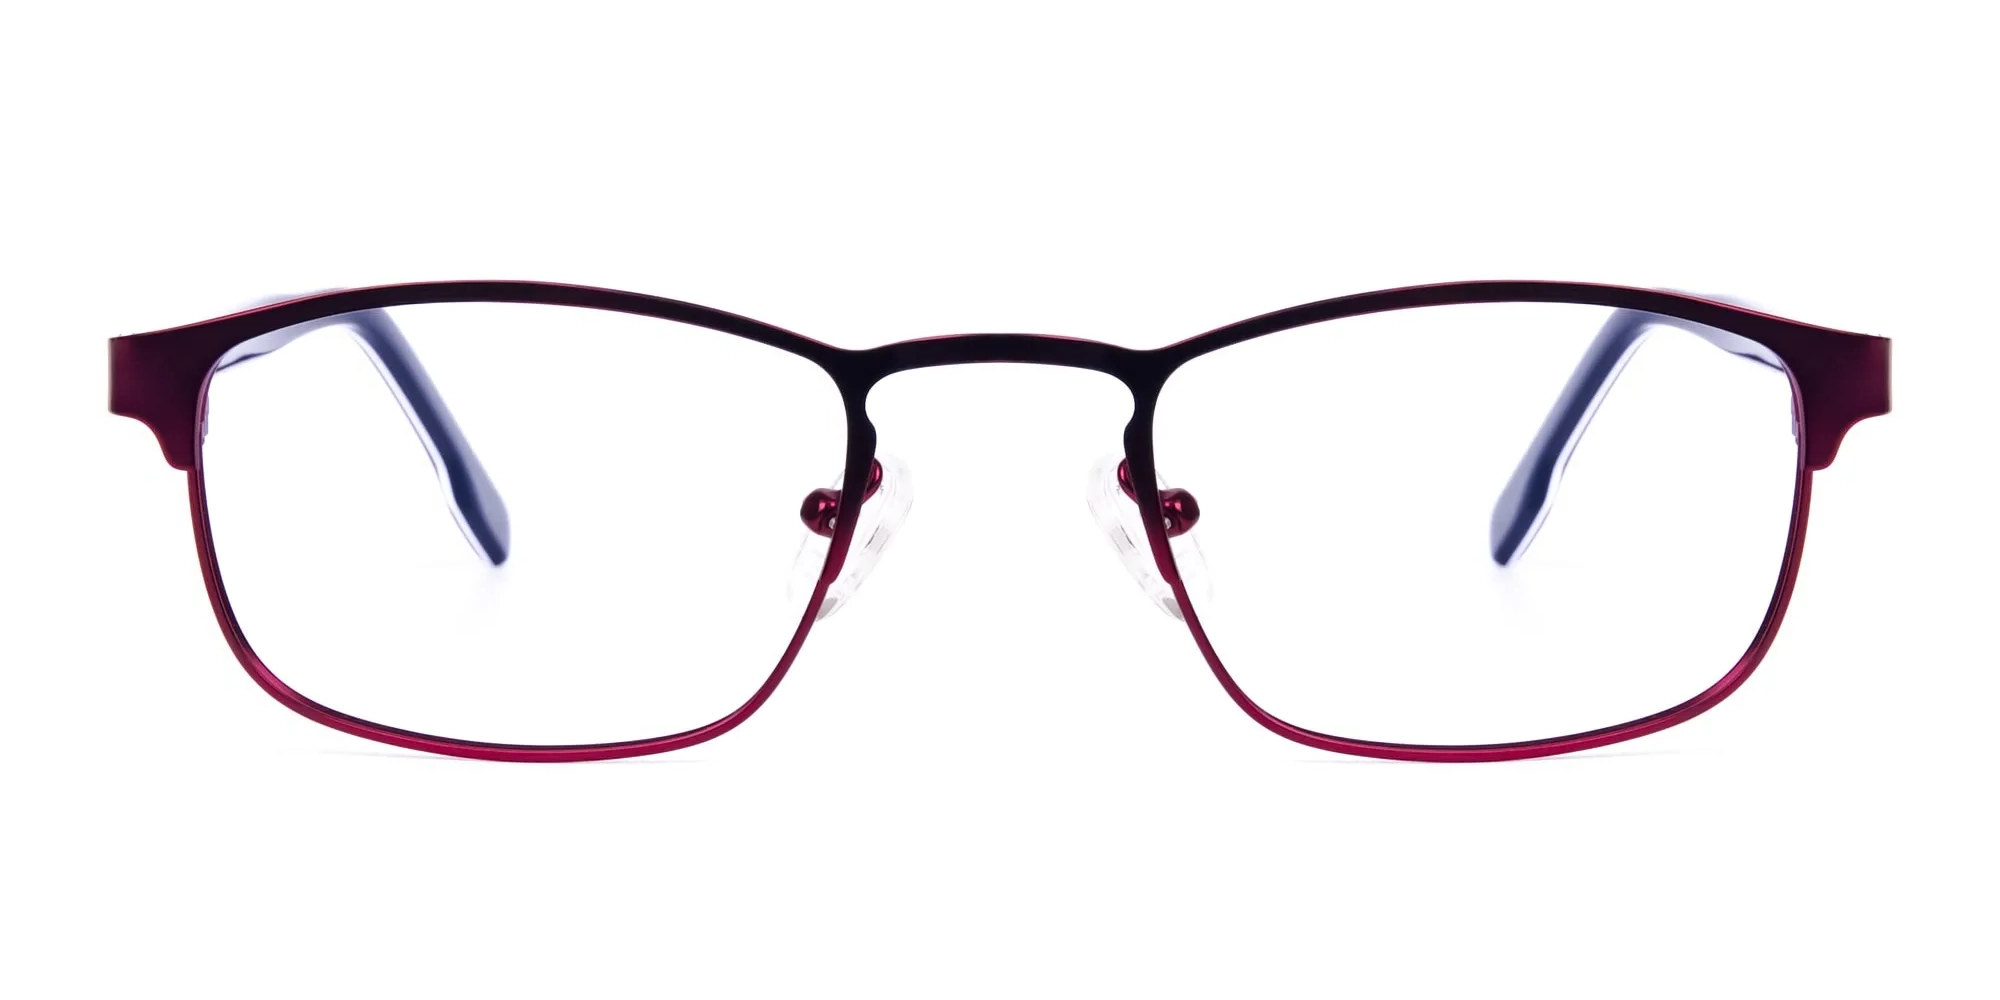 Metallic Red Rectangle Glasses Frames